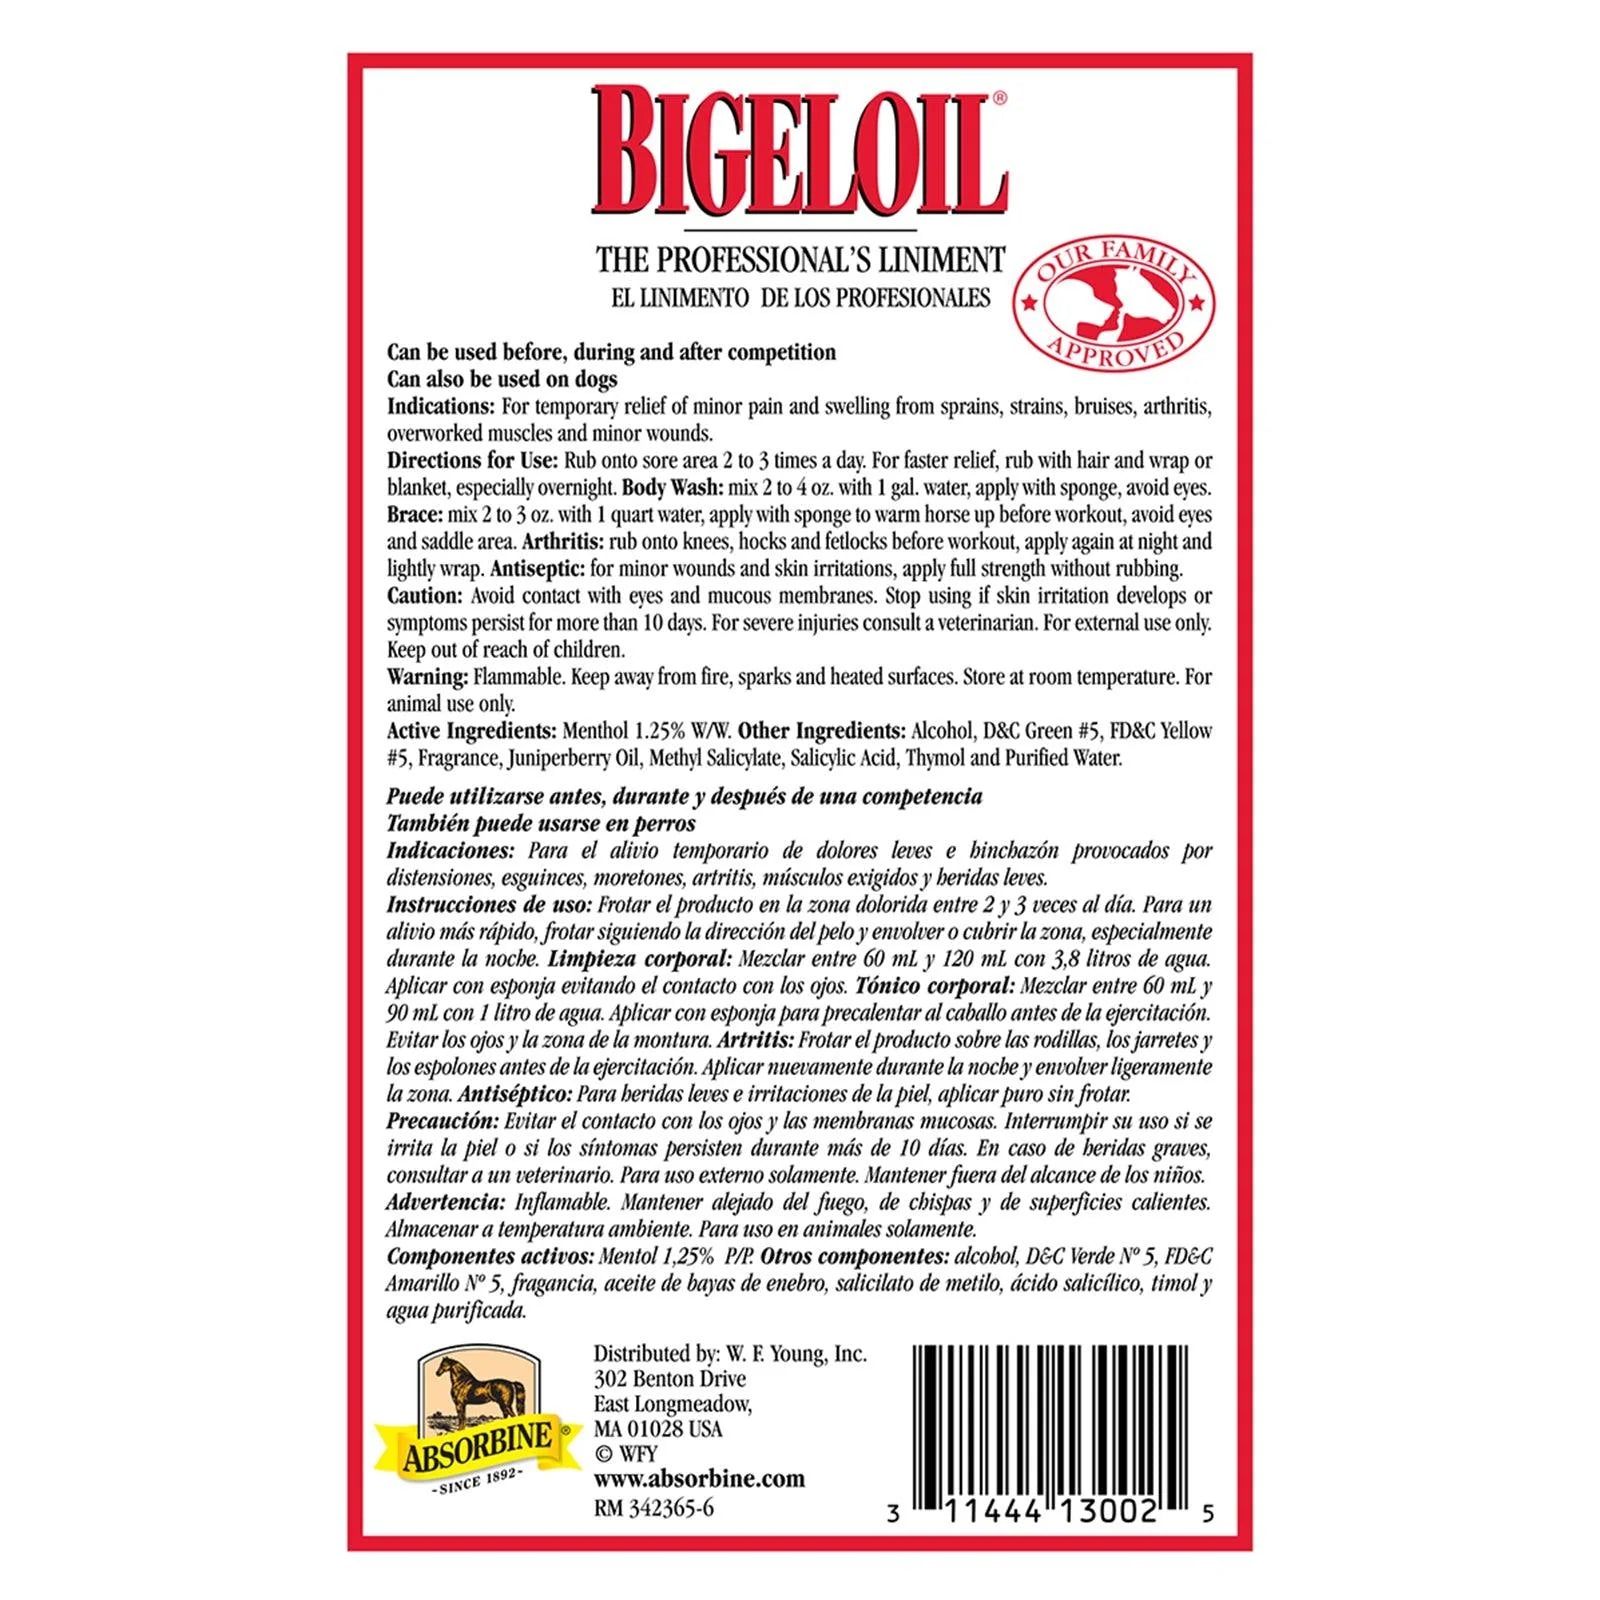 Absorbine Bigeloil® Liniment